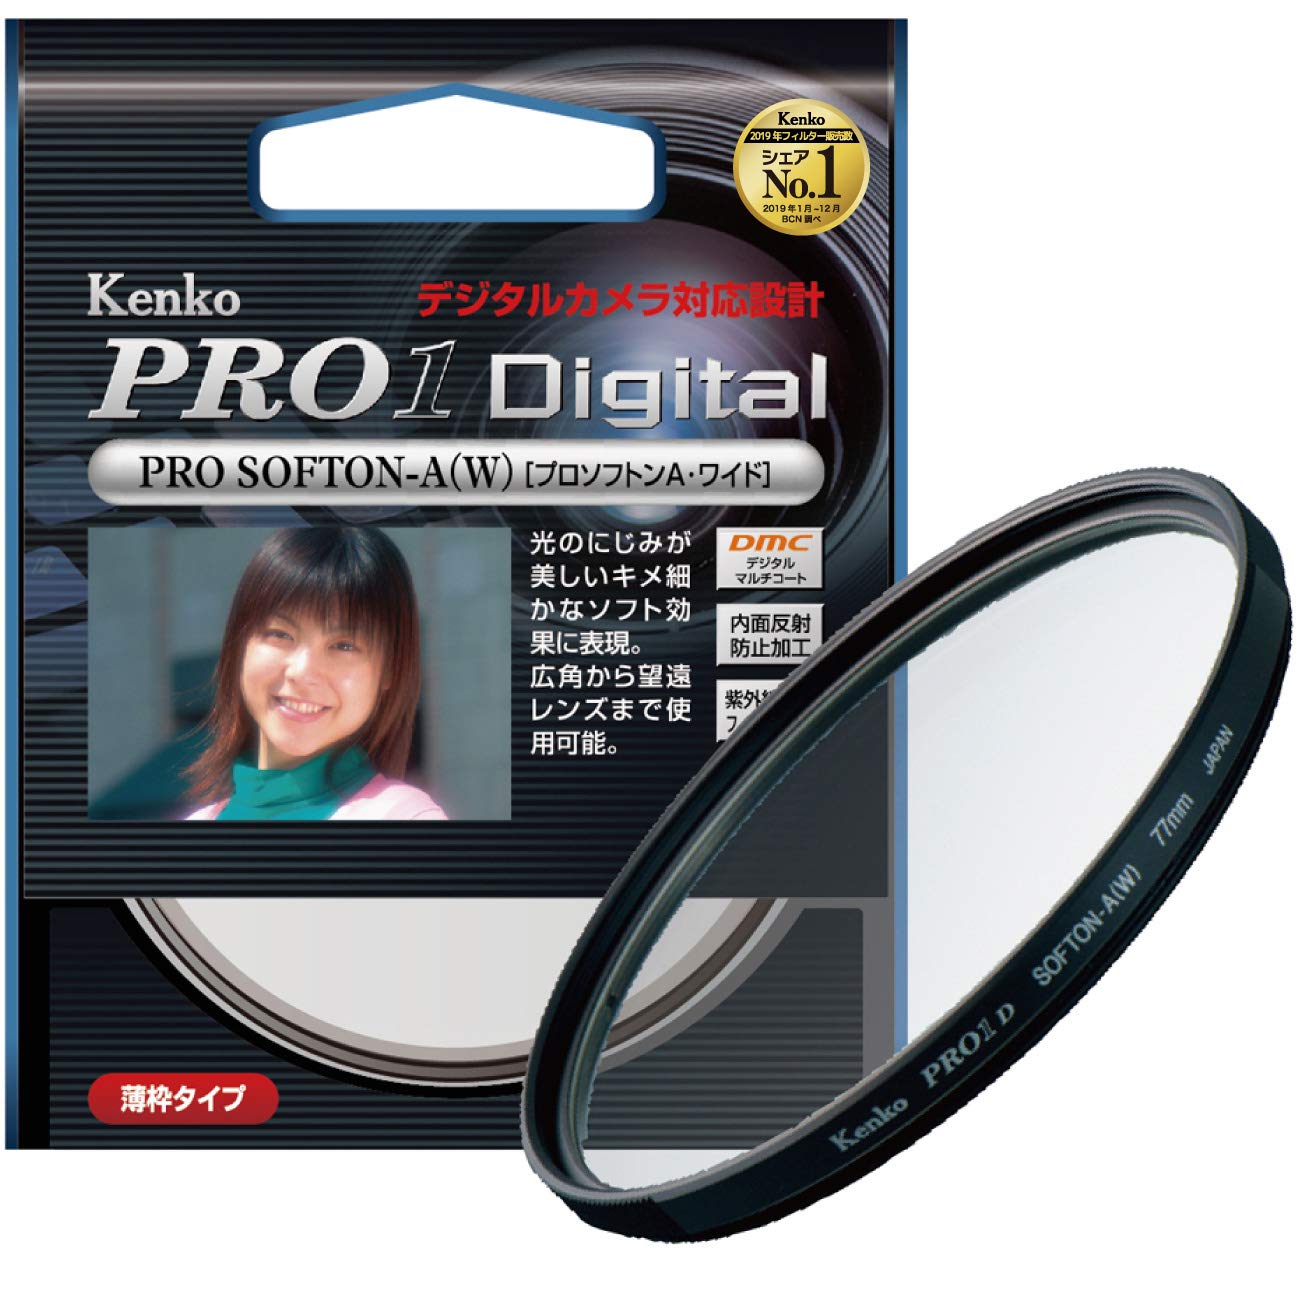 Kenko カメラ用フィルター PRO1D プロソフトン [A] (W) 49mm ソフト描写用 249888